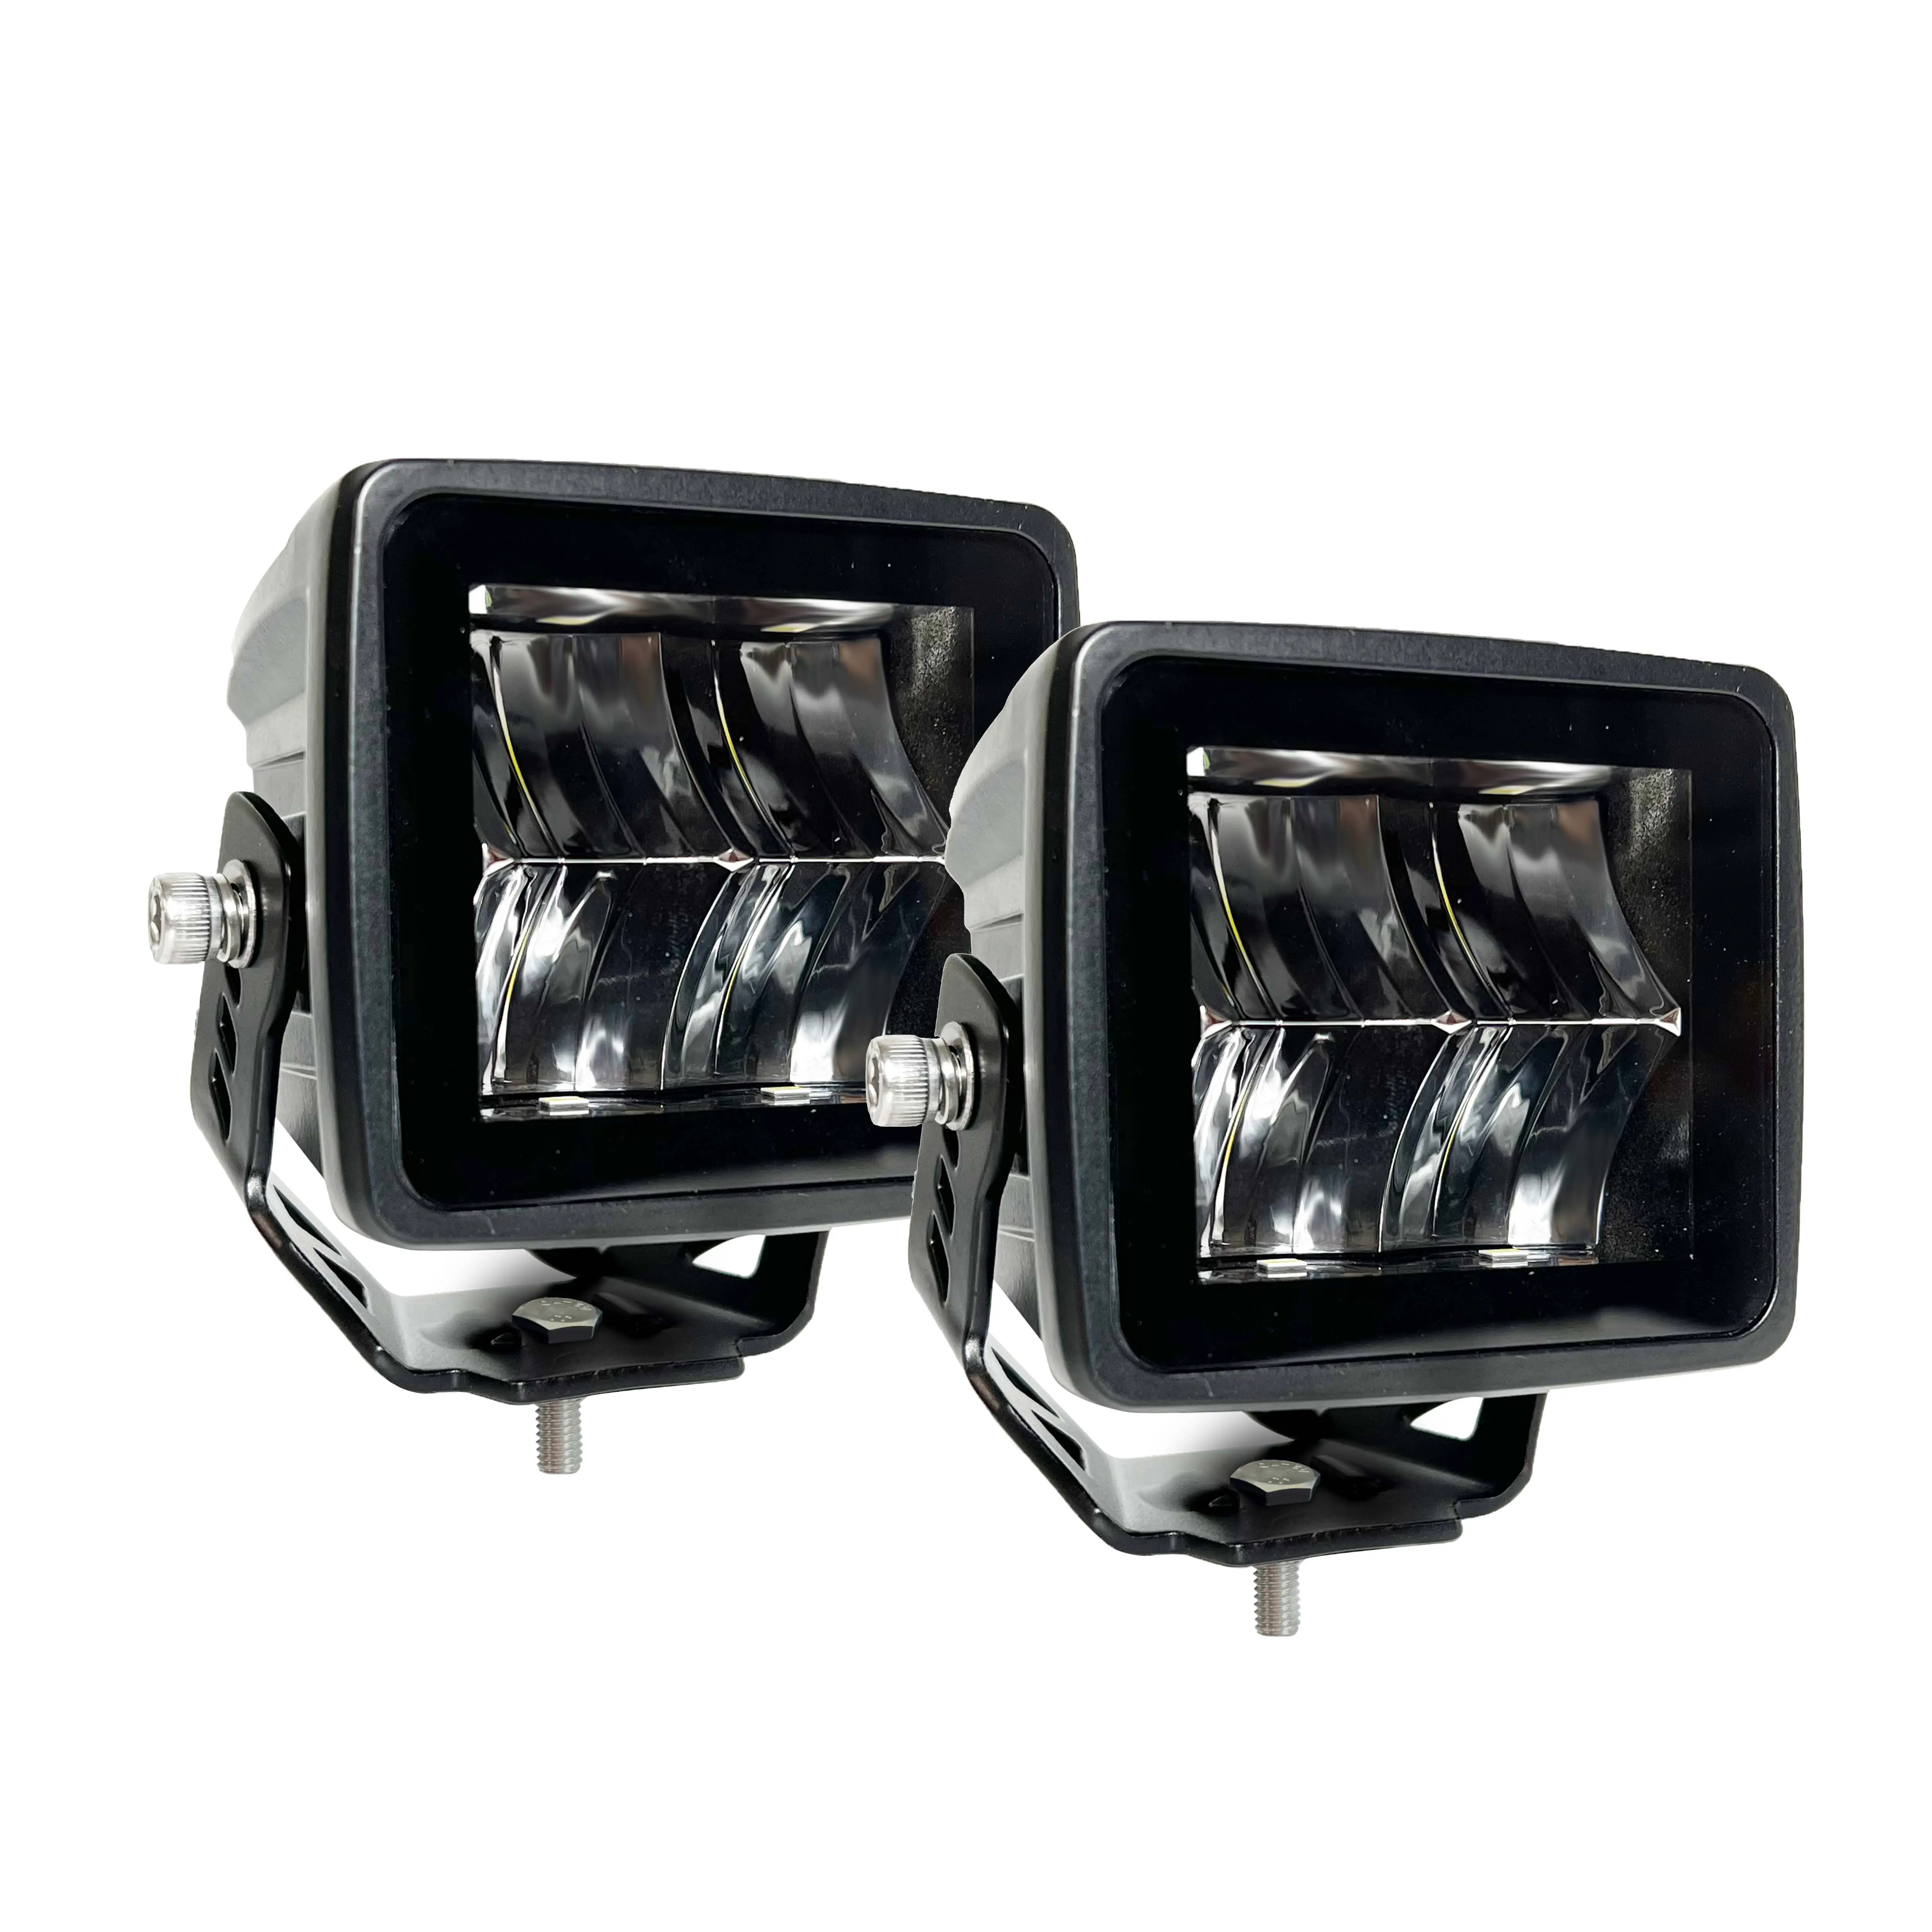 N2 batang lampu kerja LED 5 inci paduan aluminium, lampu kabut, lampu depan cocok untuk truk/SUV/ Moto/perahu/Offroad dll.